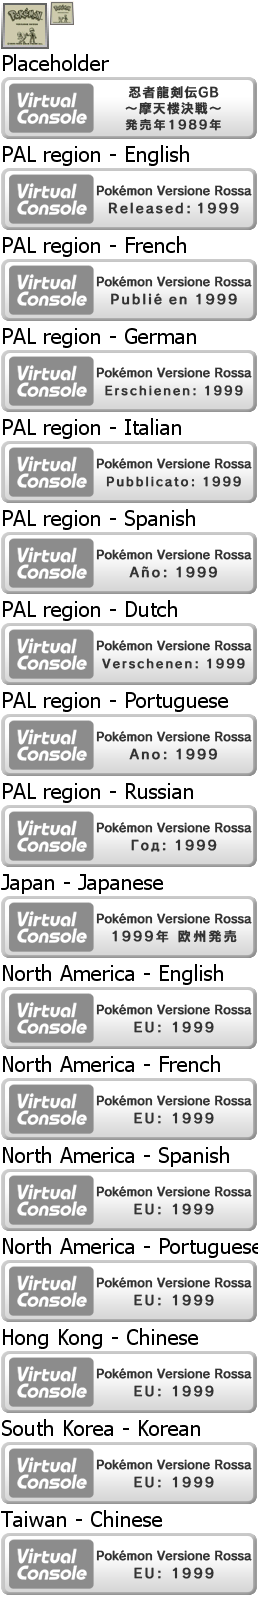 Virtual Console - Pokémon Versione Rossa